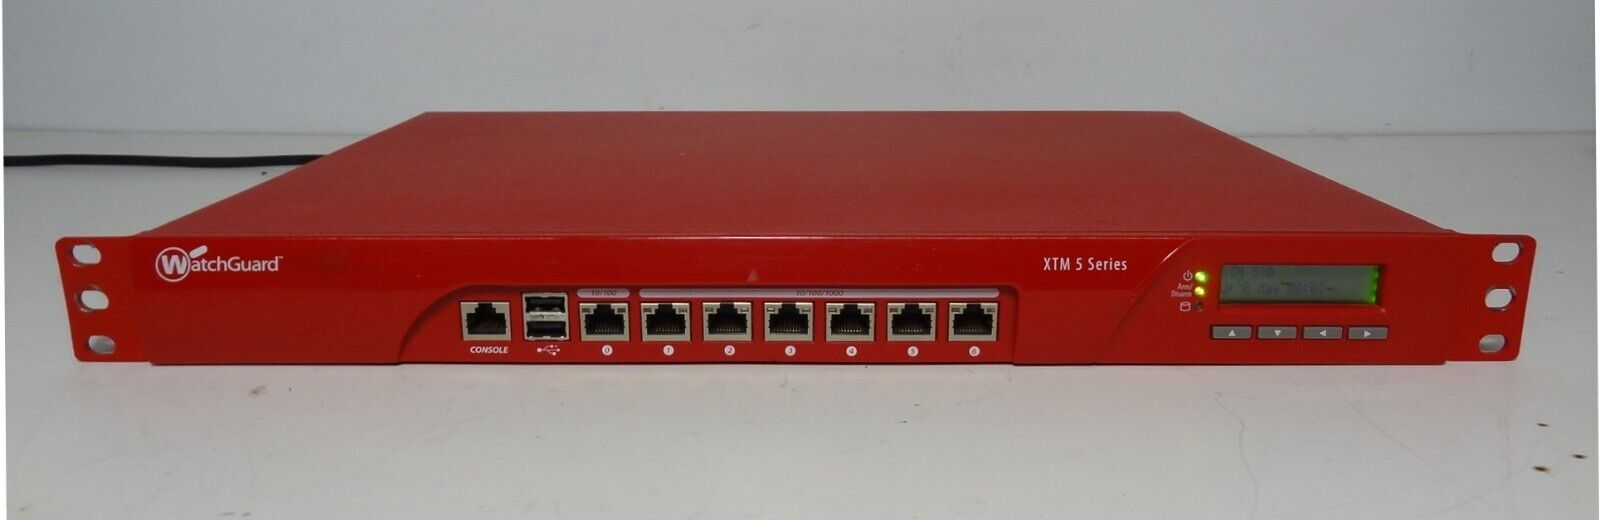 WatchGuard XTM-510 Firewall Security Appliance -  XTM 5 Series - NC2AE8